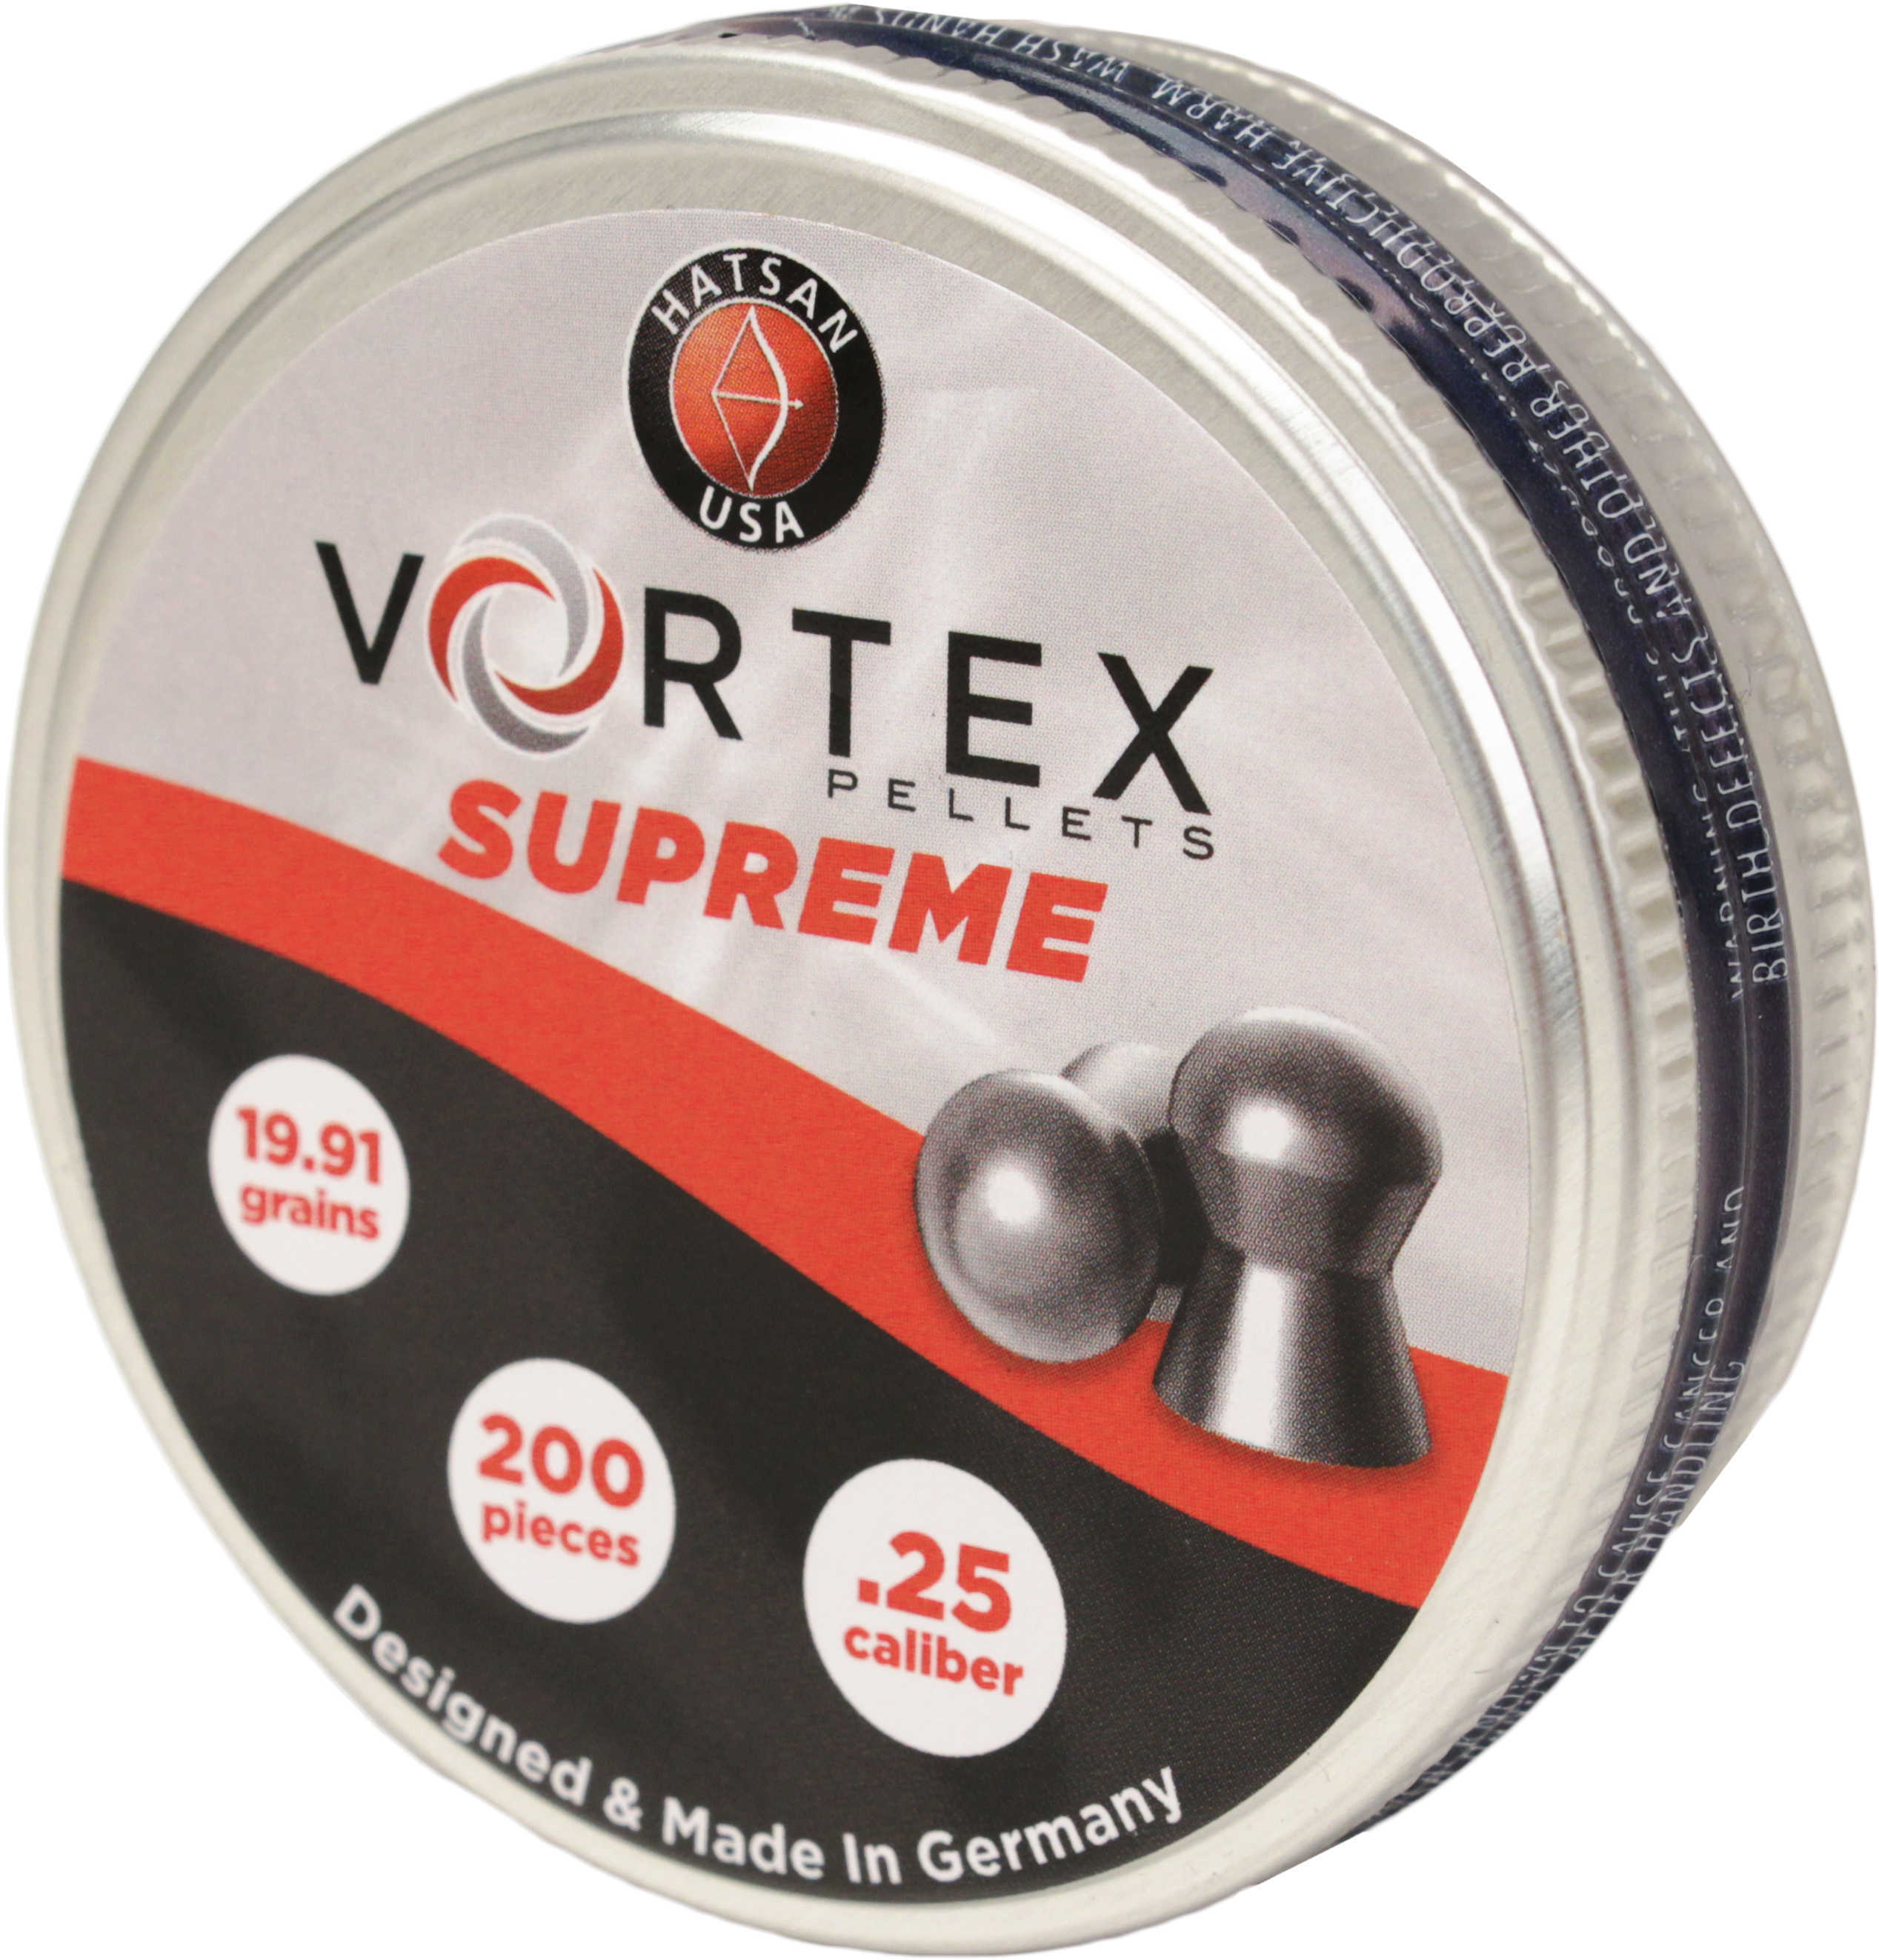 HATSAN Vortex Supreme Pellets .25 19.91 Grain 200 Pack